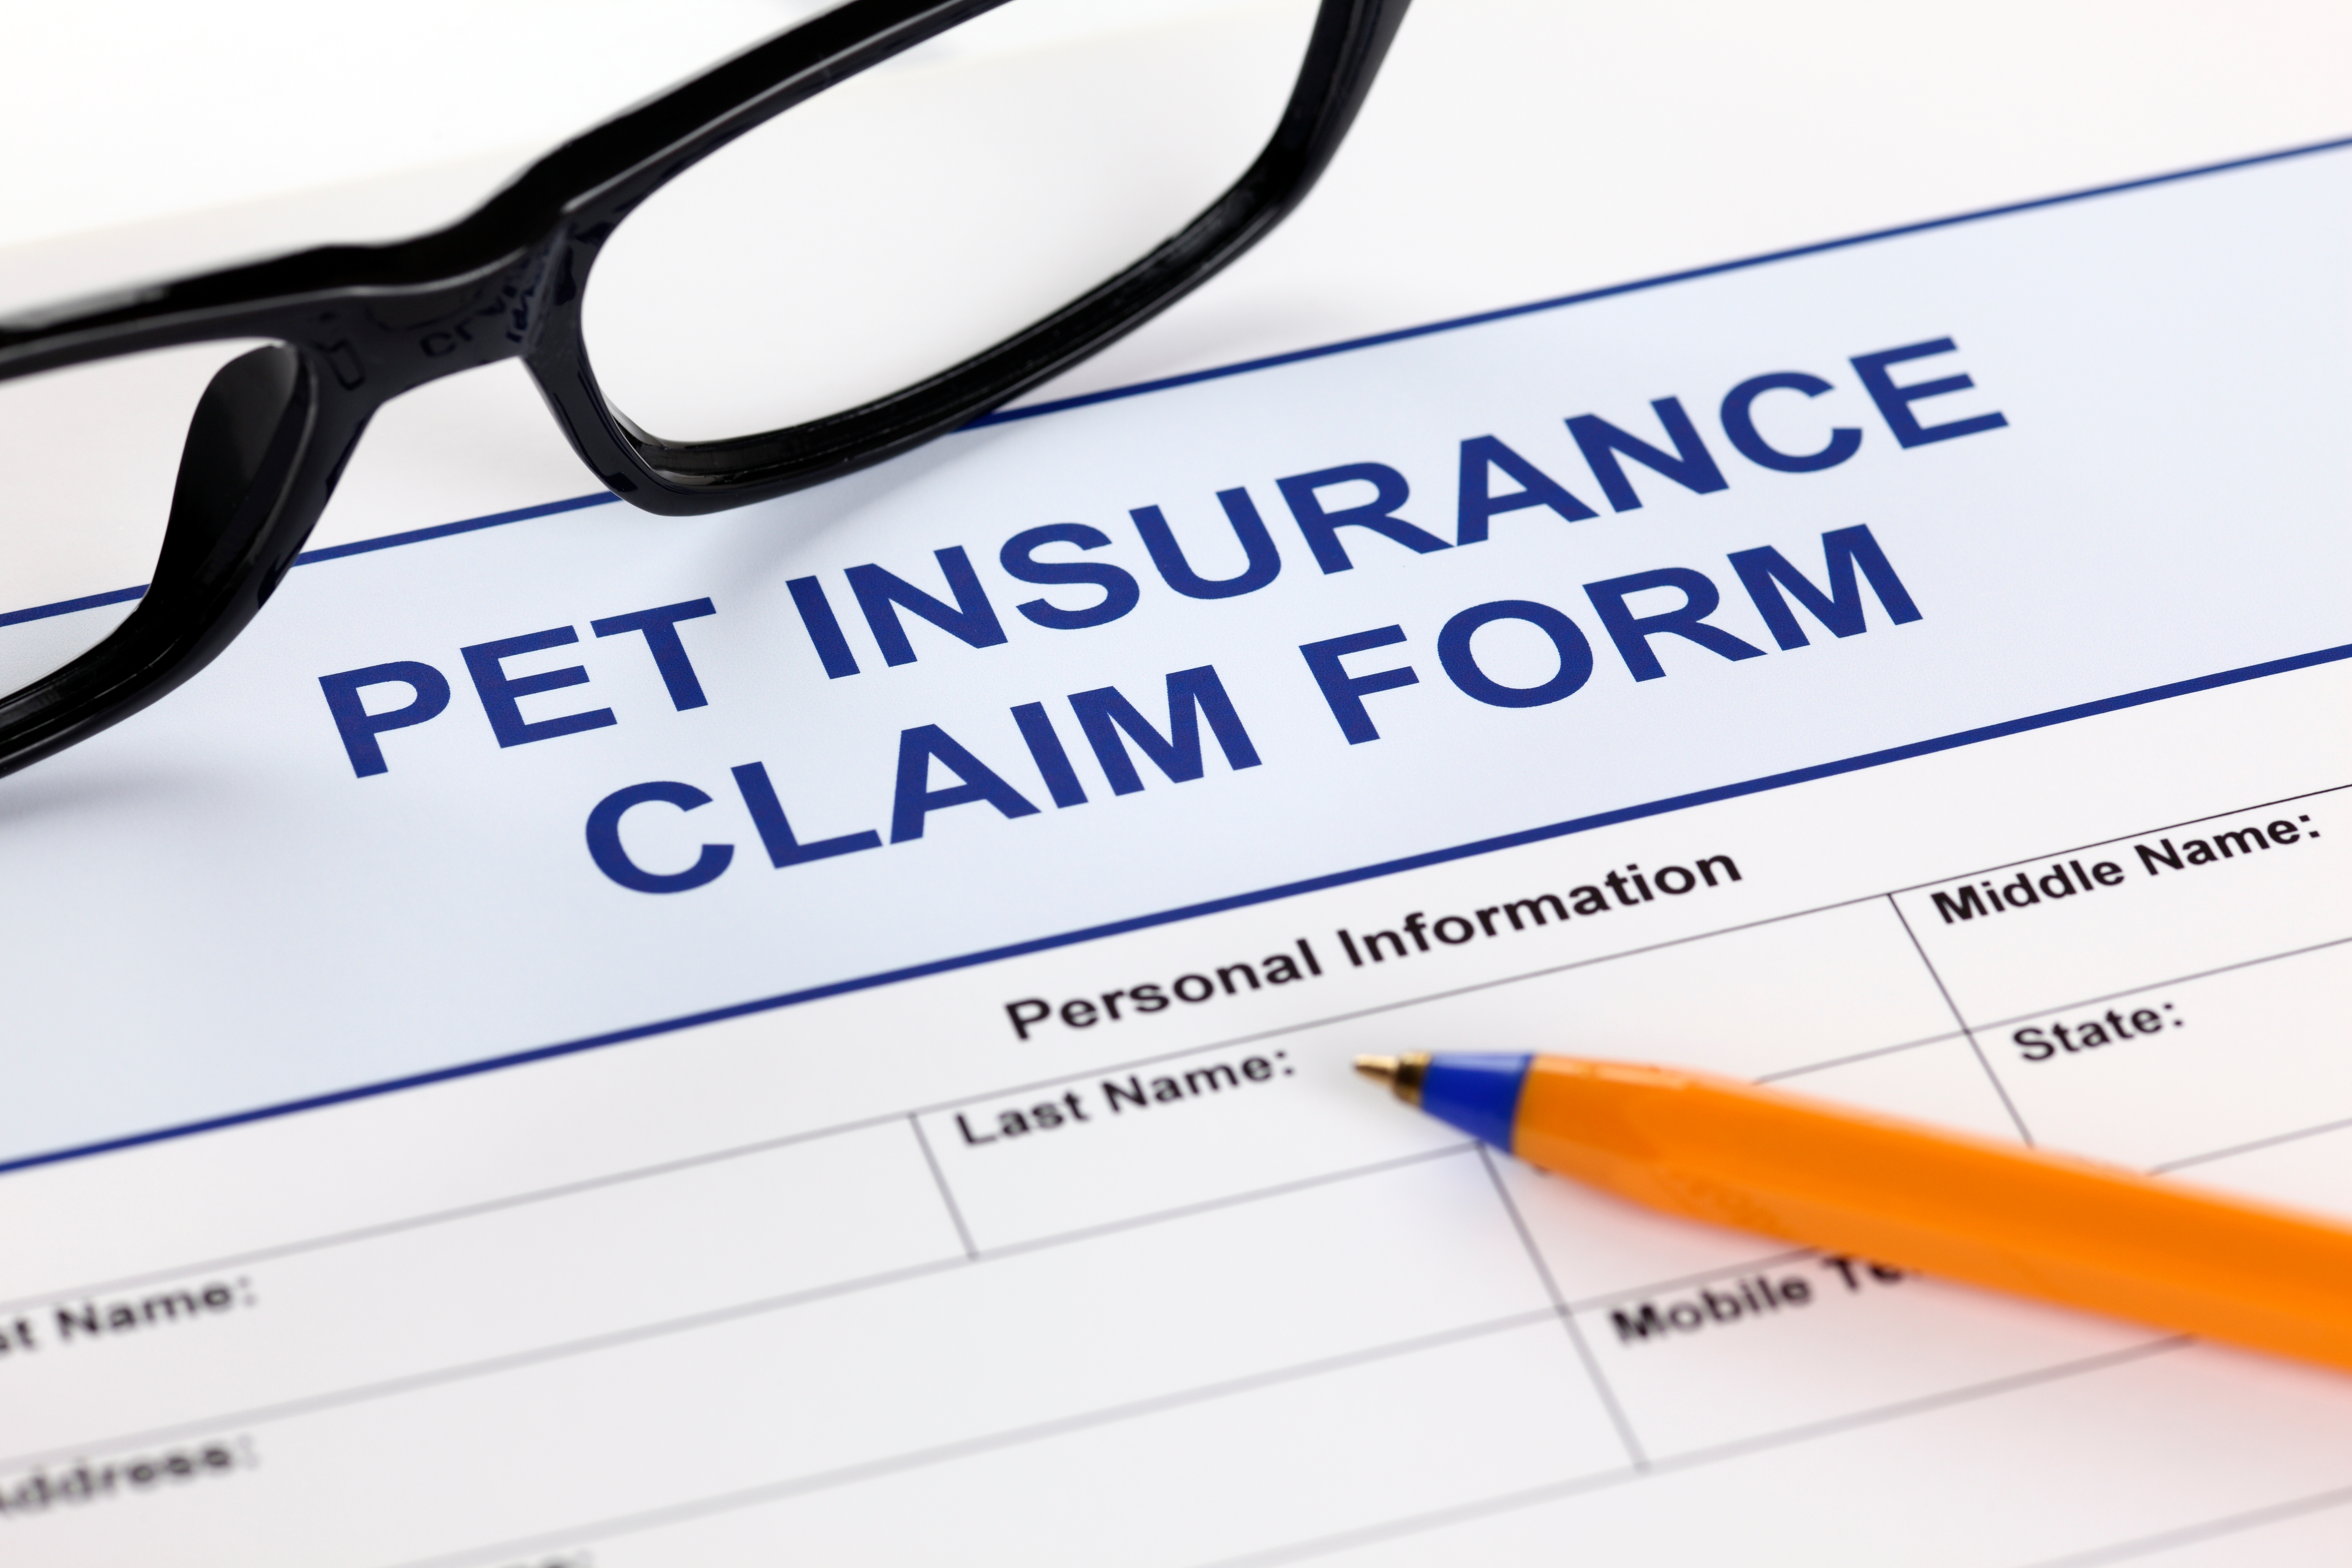 How to Make a Pet Insurance Claim